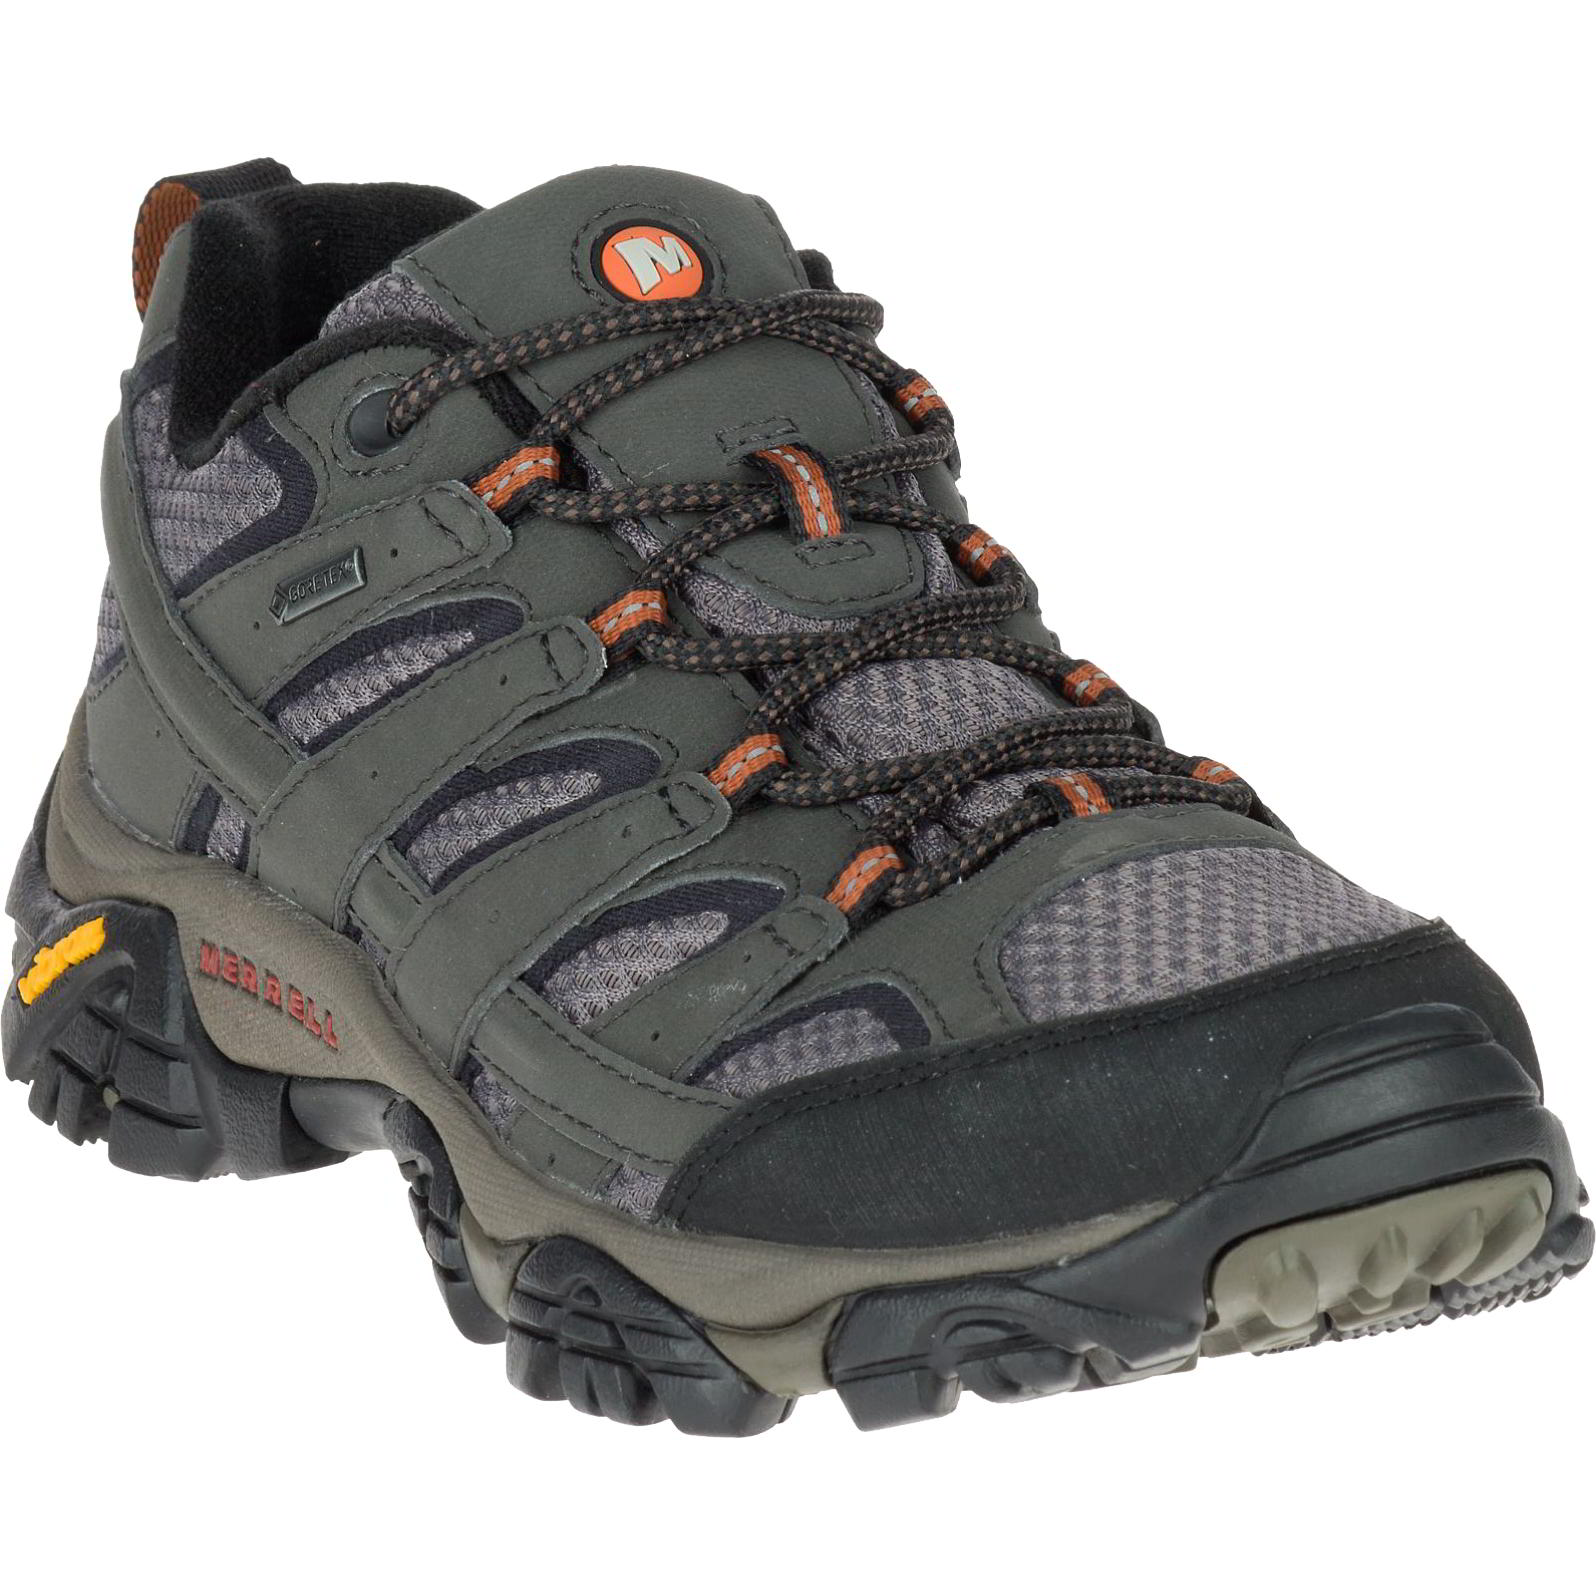 Merrell Mens Moab 2 GTX Waterproof Walking Hiking Shoes Trainers - UK 10.5